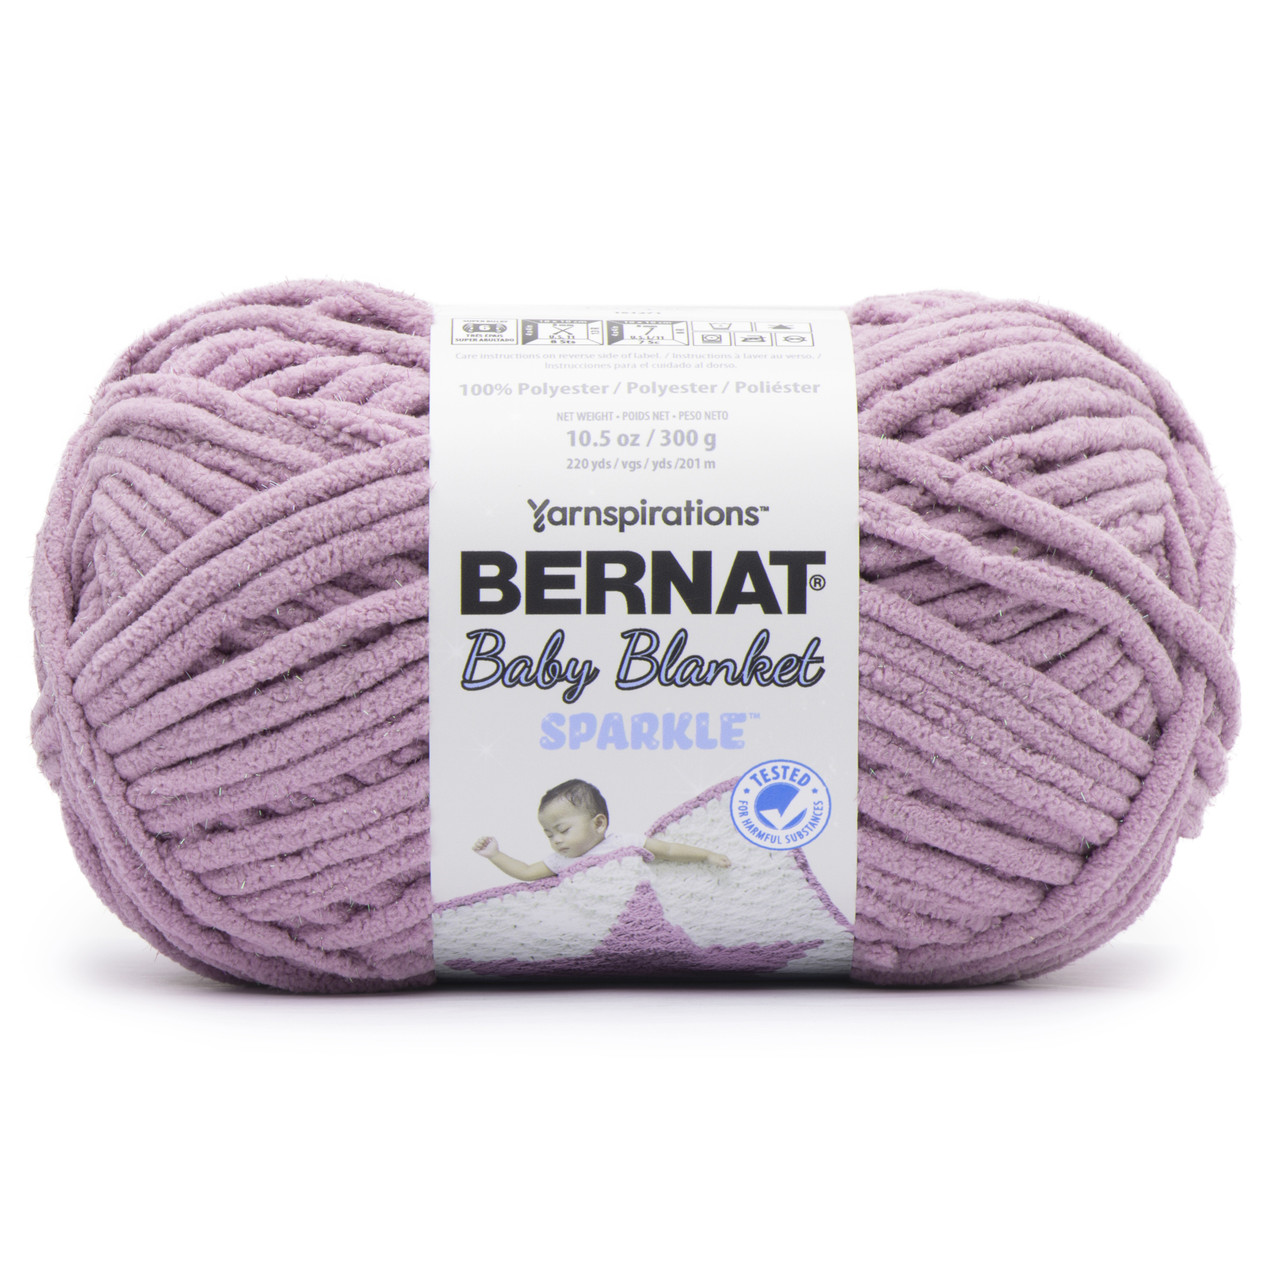 Bernat Baby Blanket Yarn - 3 Pack with Pattern - Lilac